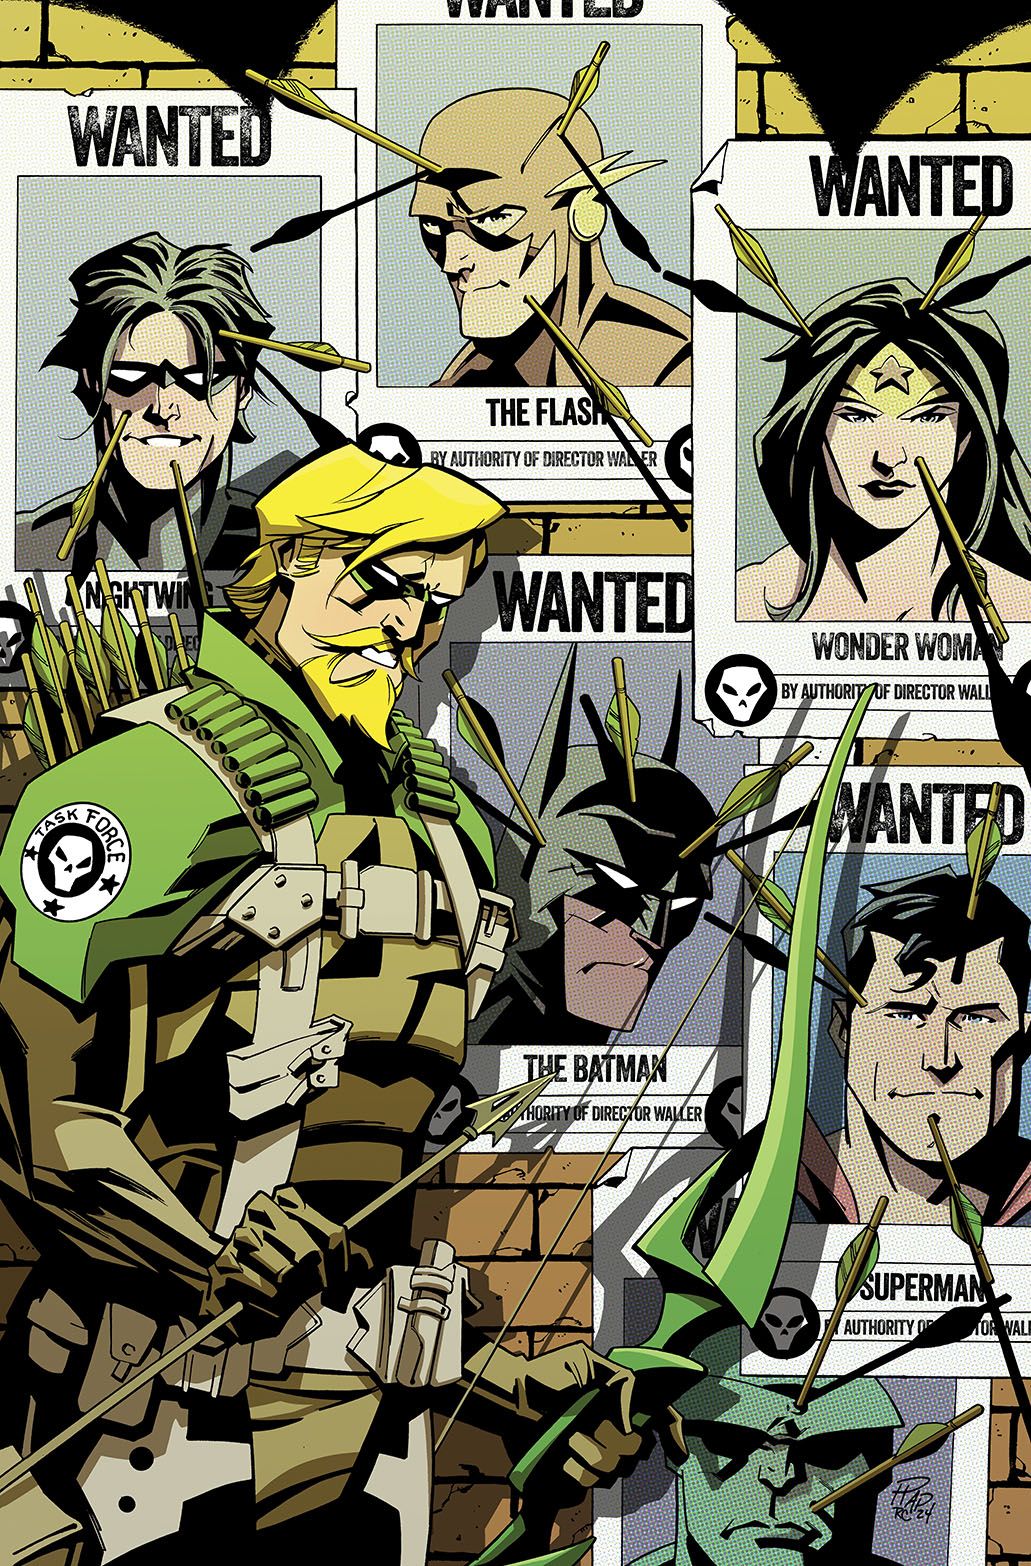 Green Arrow 14 (Hester)